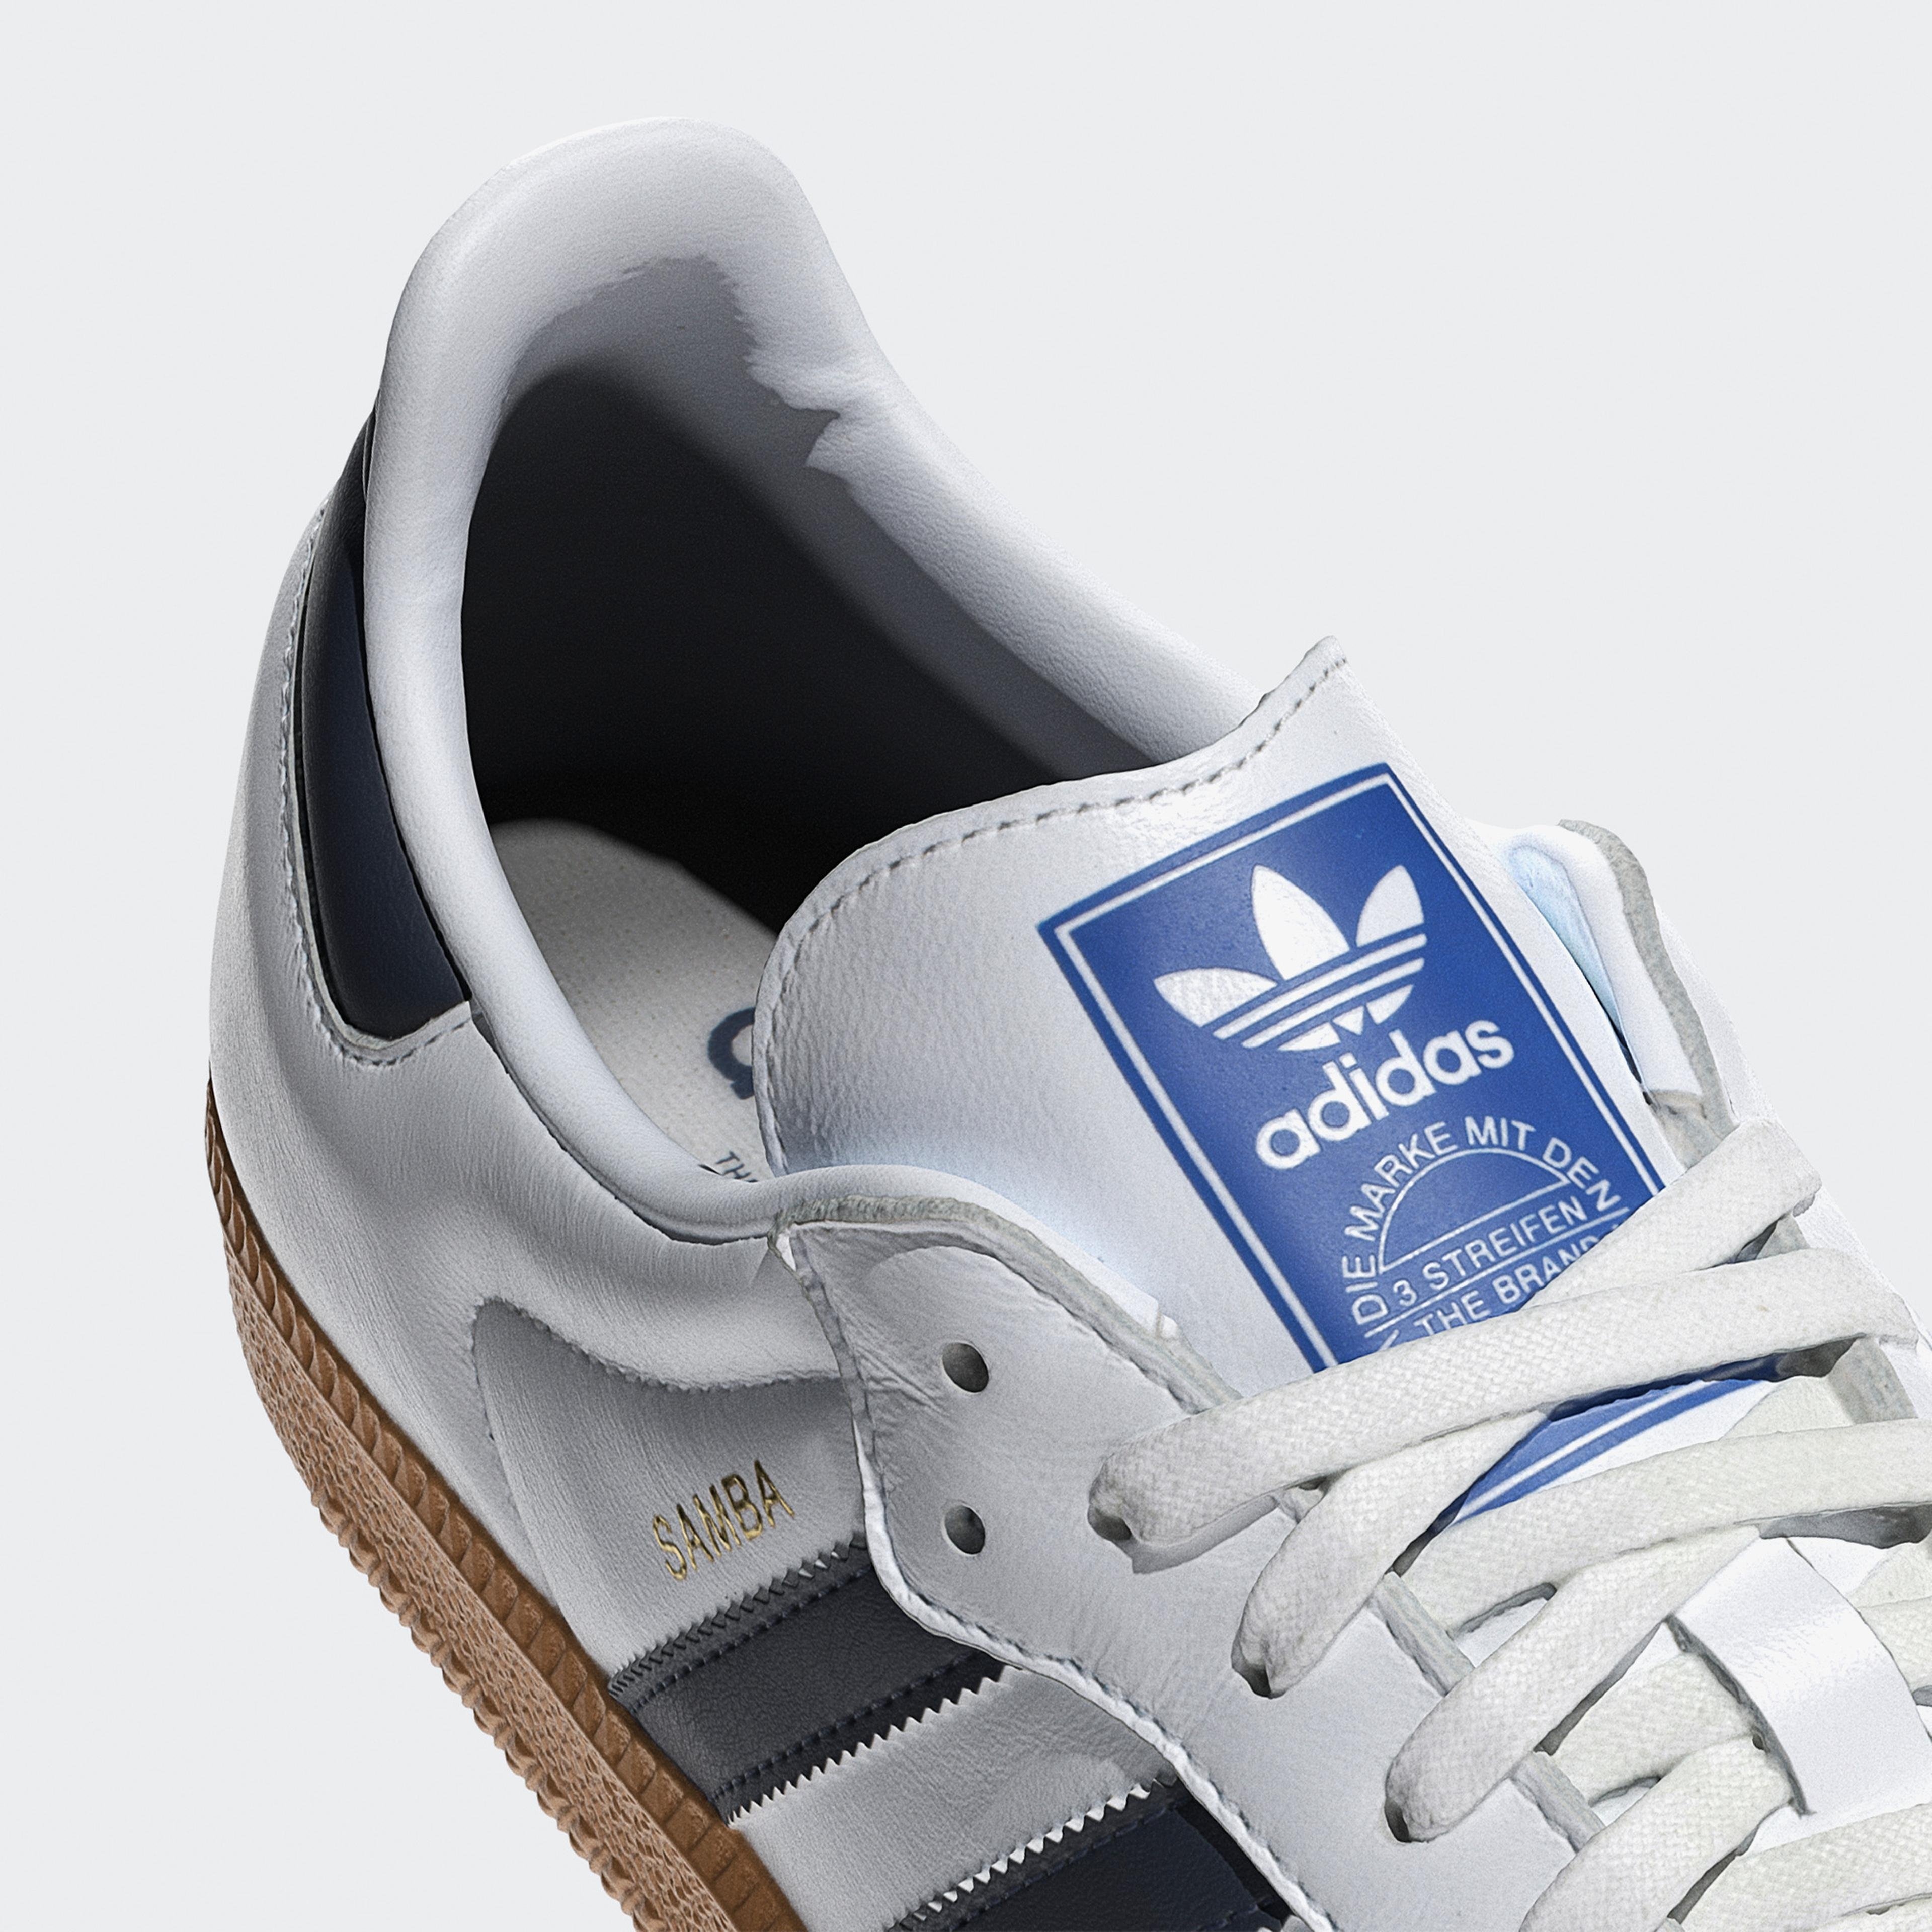 adidas Originals Samba Og Unisex Lacivert Çizgili Beyaz Spor Ayakkabı